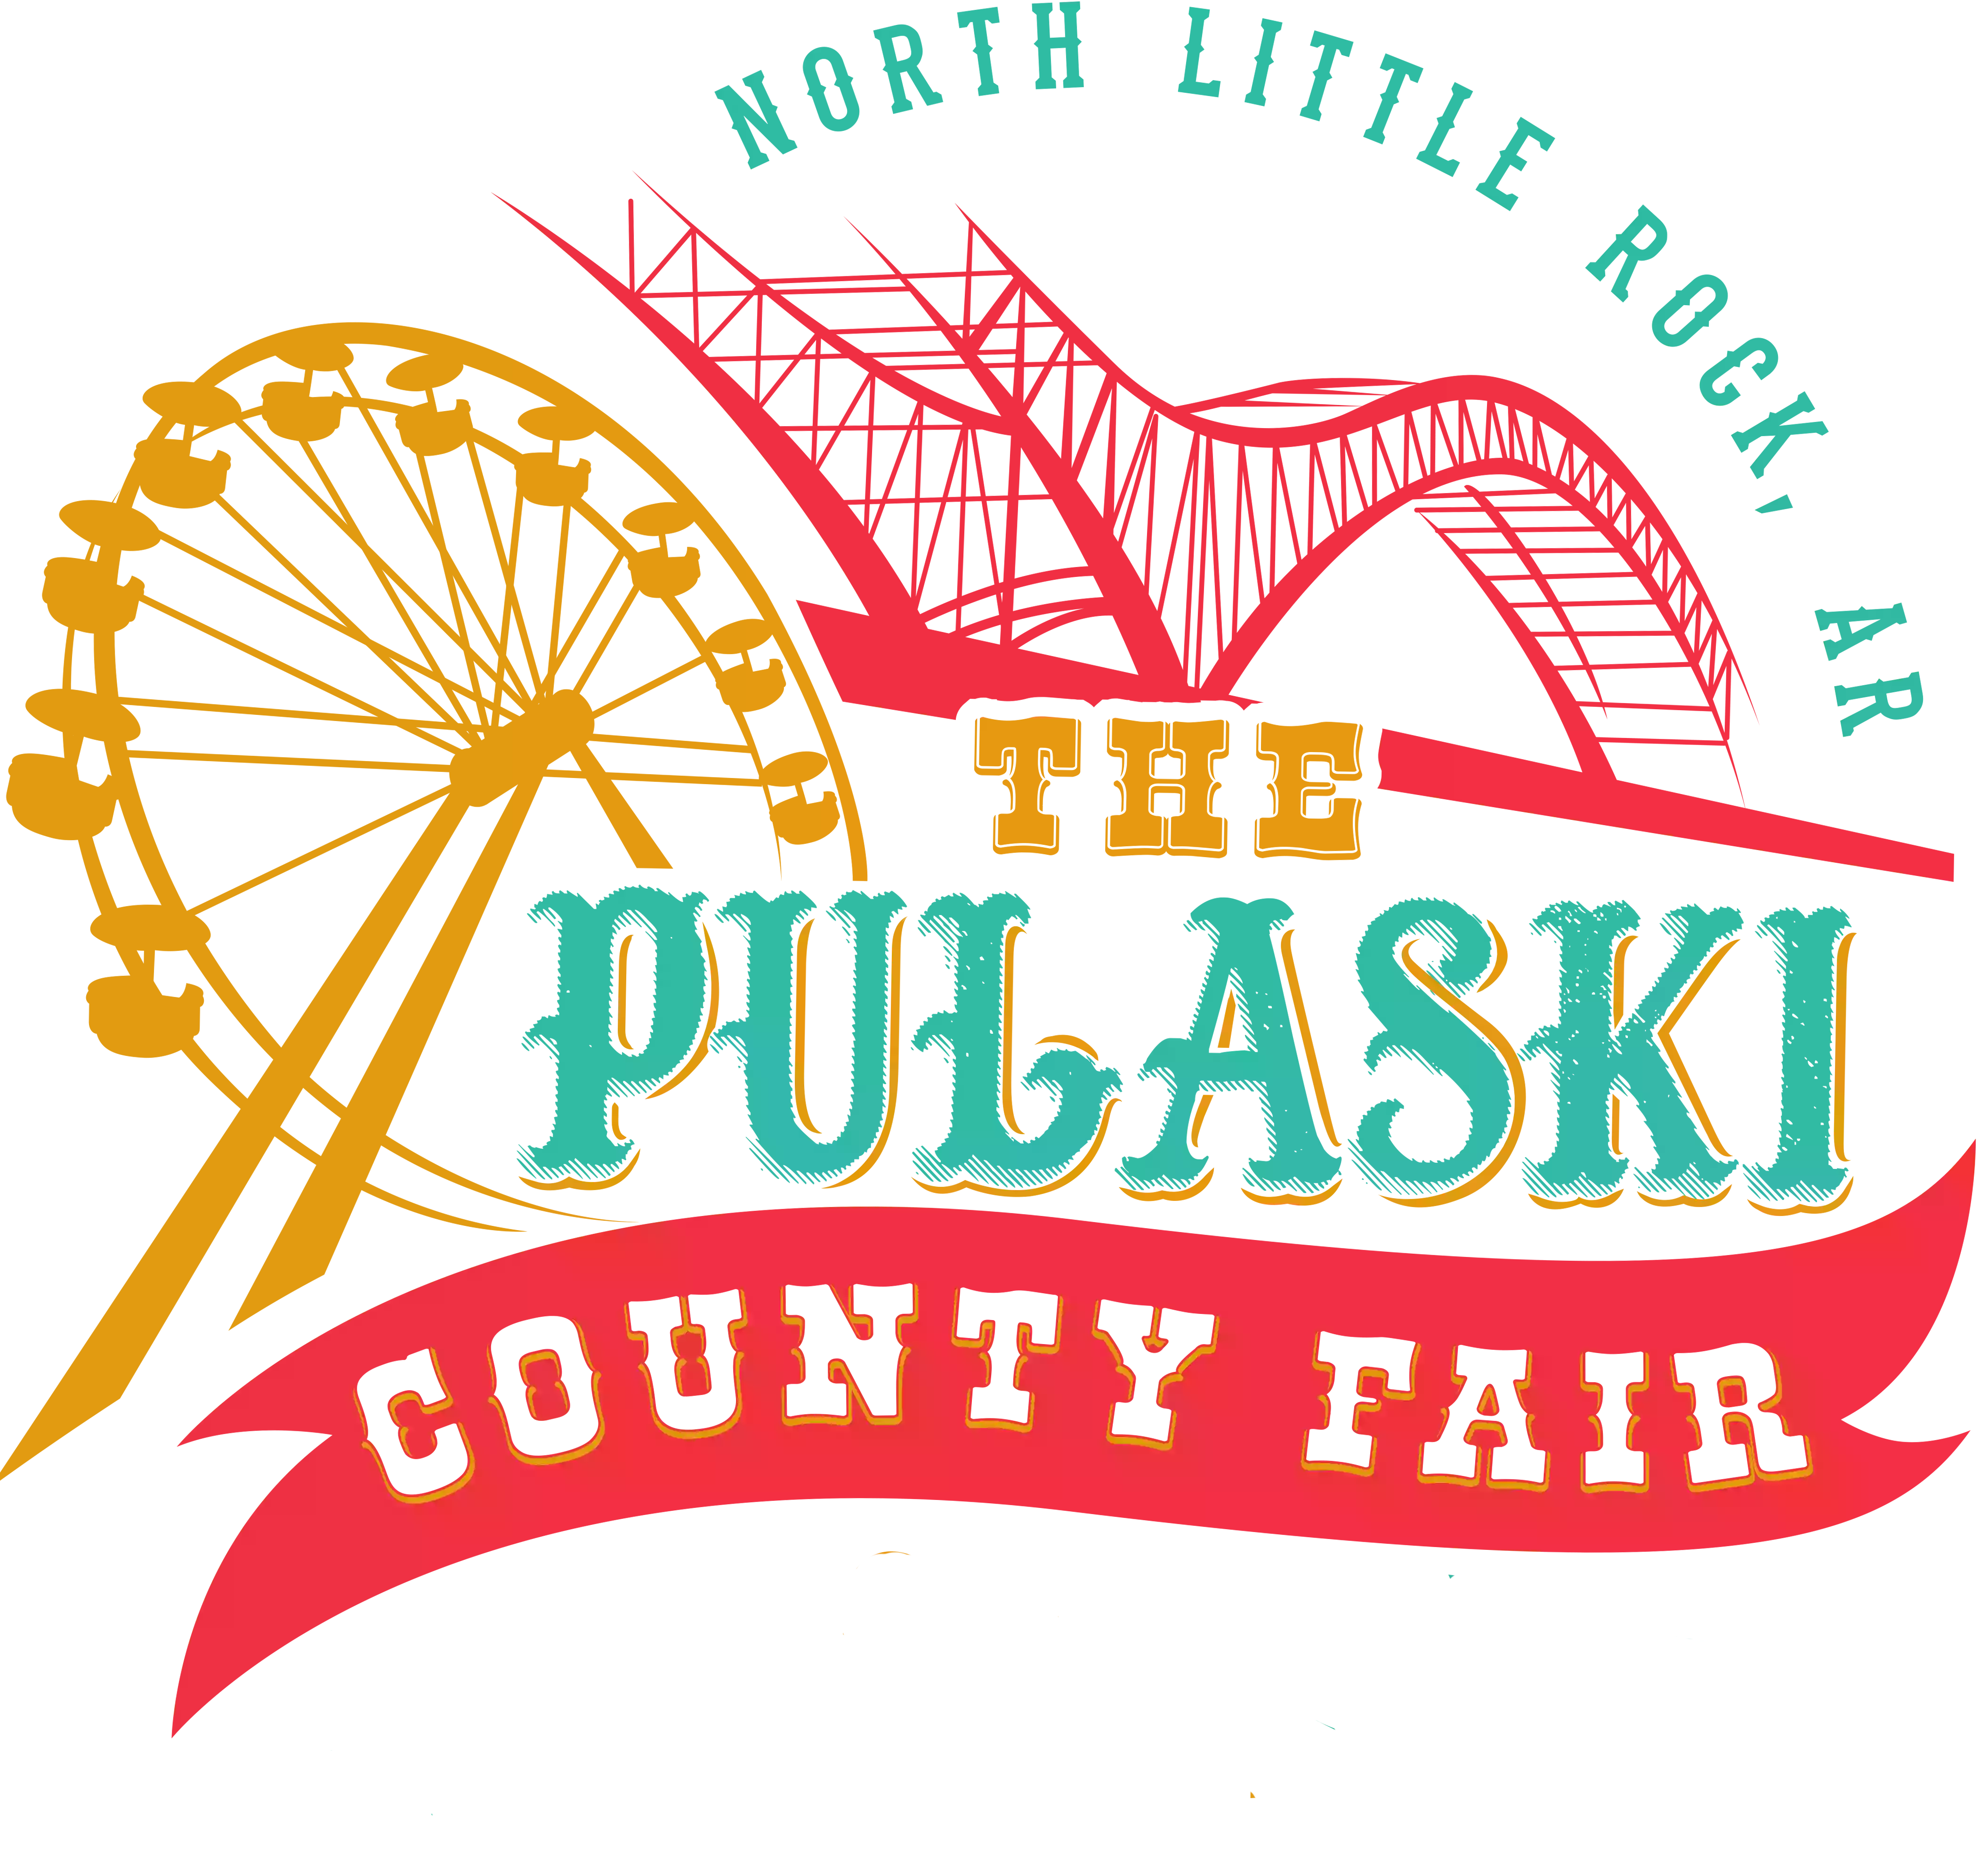 The Pulaski County Fair